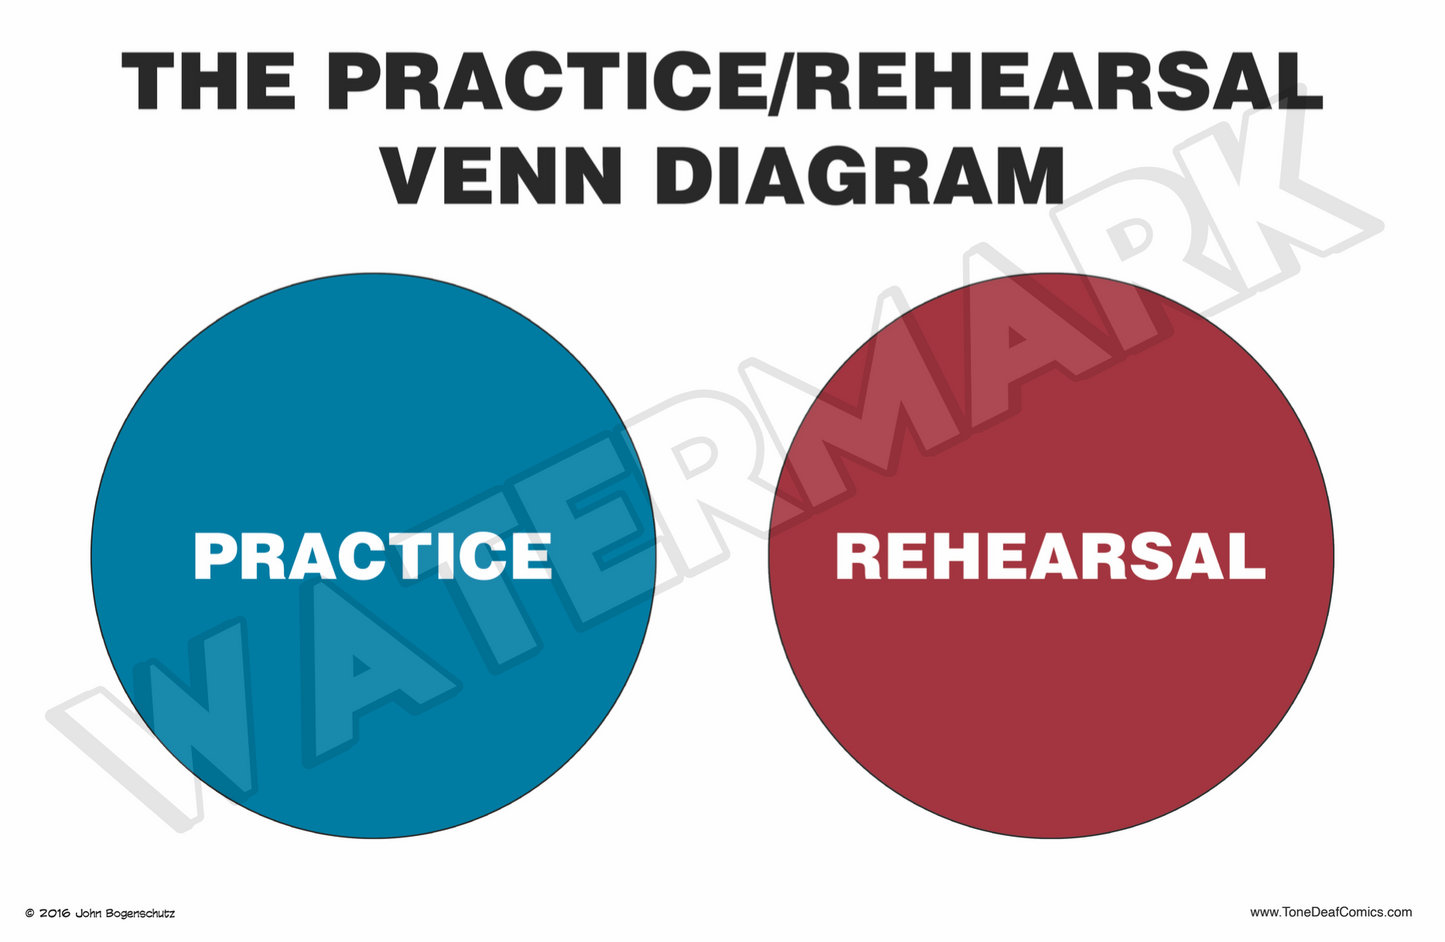 Practice Rehearsal Venn Diagram